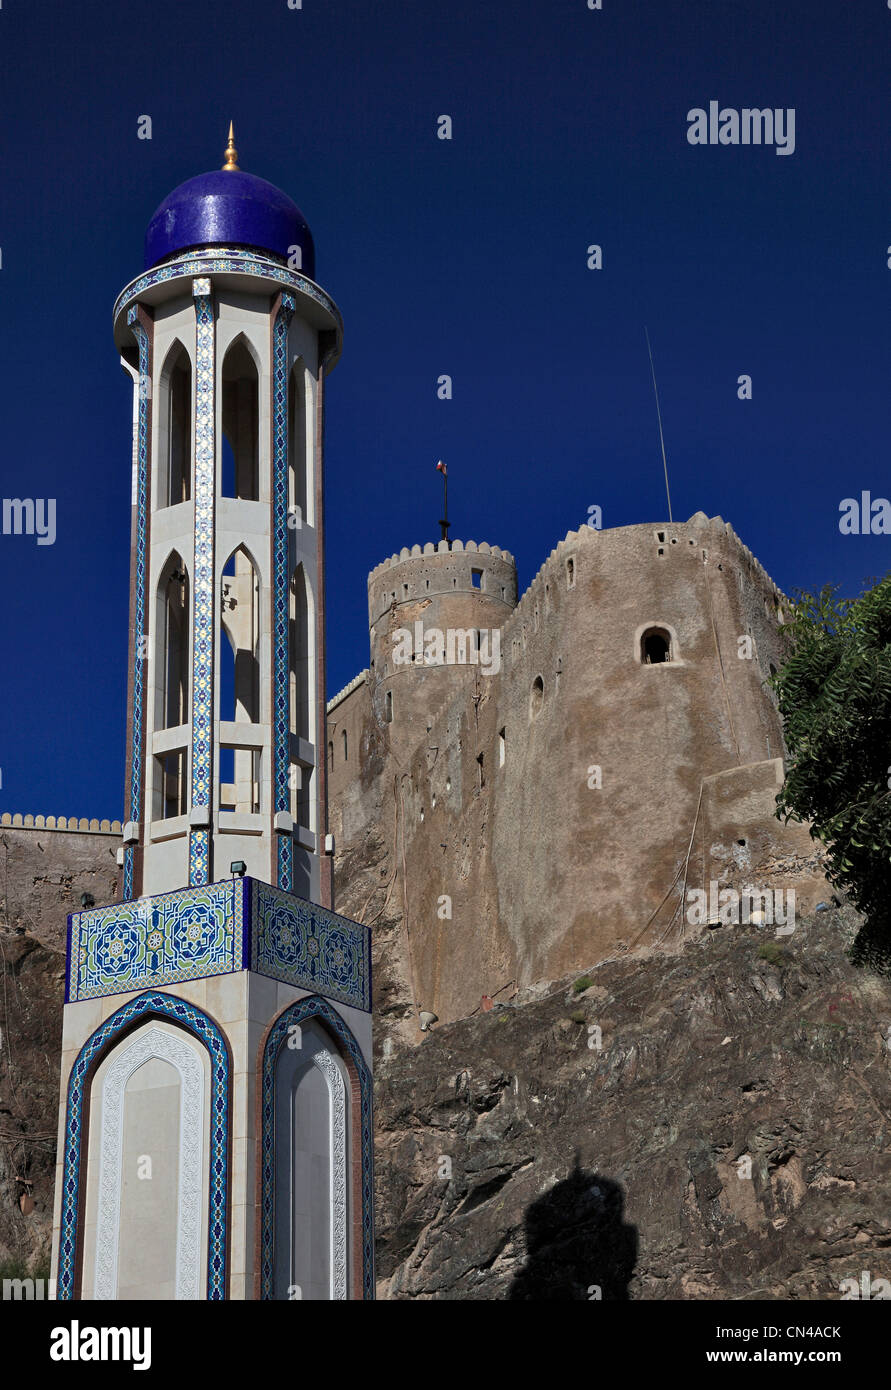 Minarett der Moschee Masjid al-Khor und Fort Mirani in Muscat, Oman Stock Photo